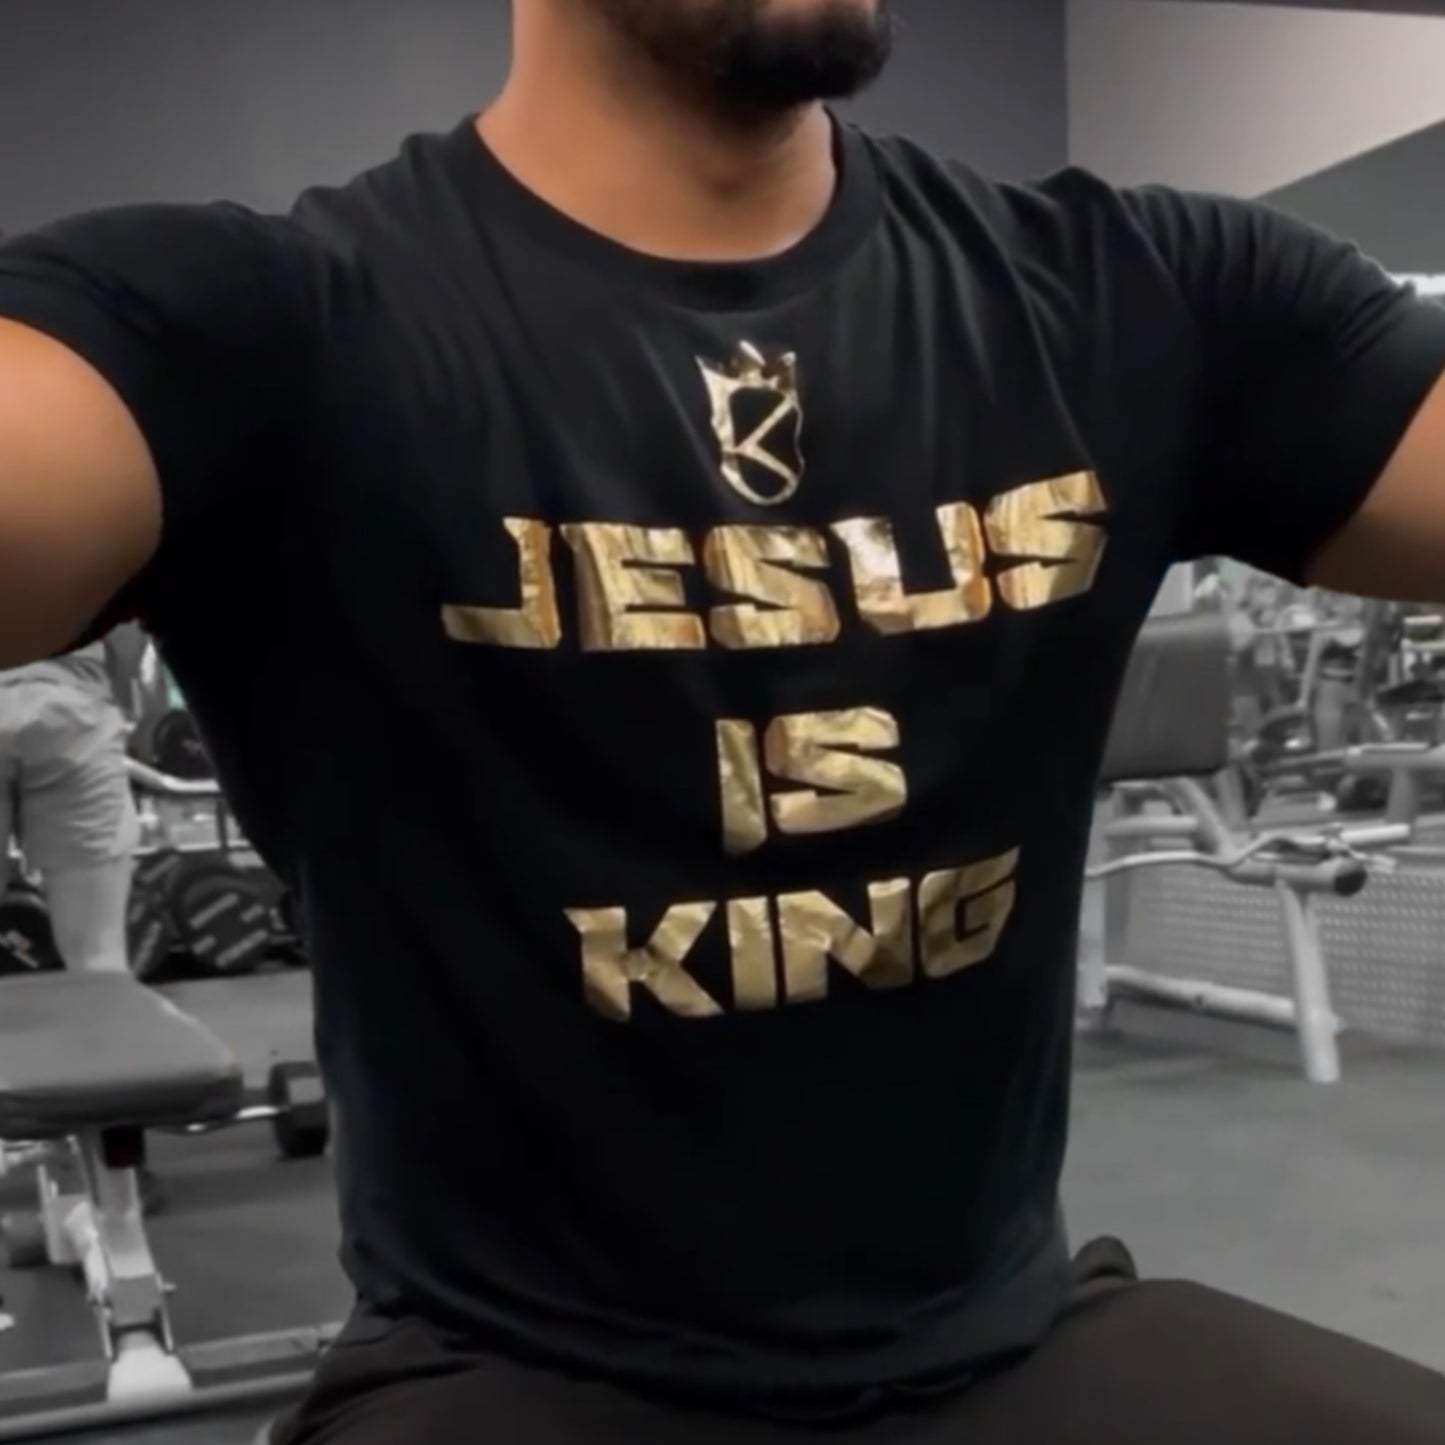 JESUS IS KING Short Sleeve Triblend